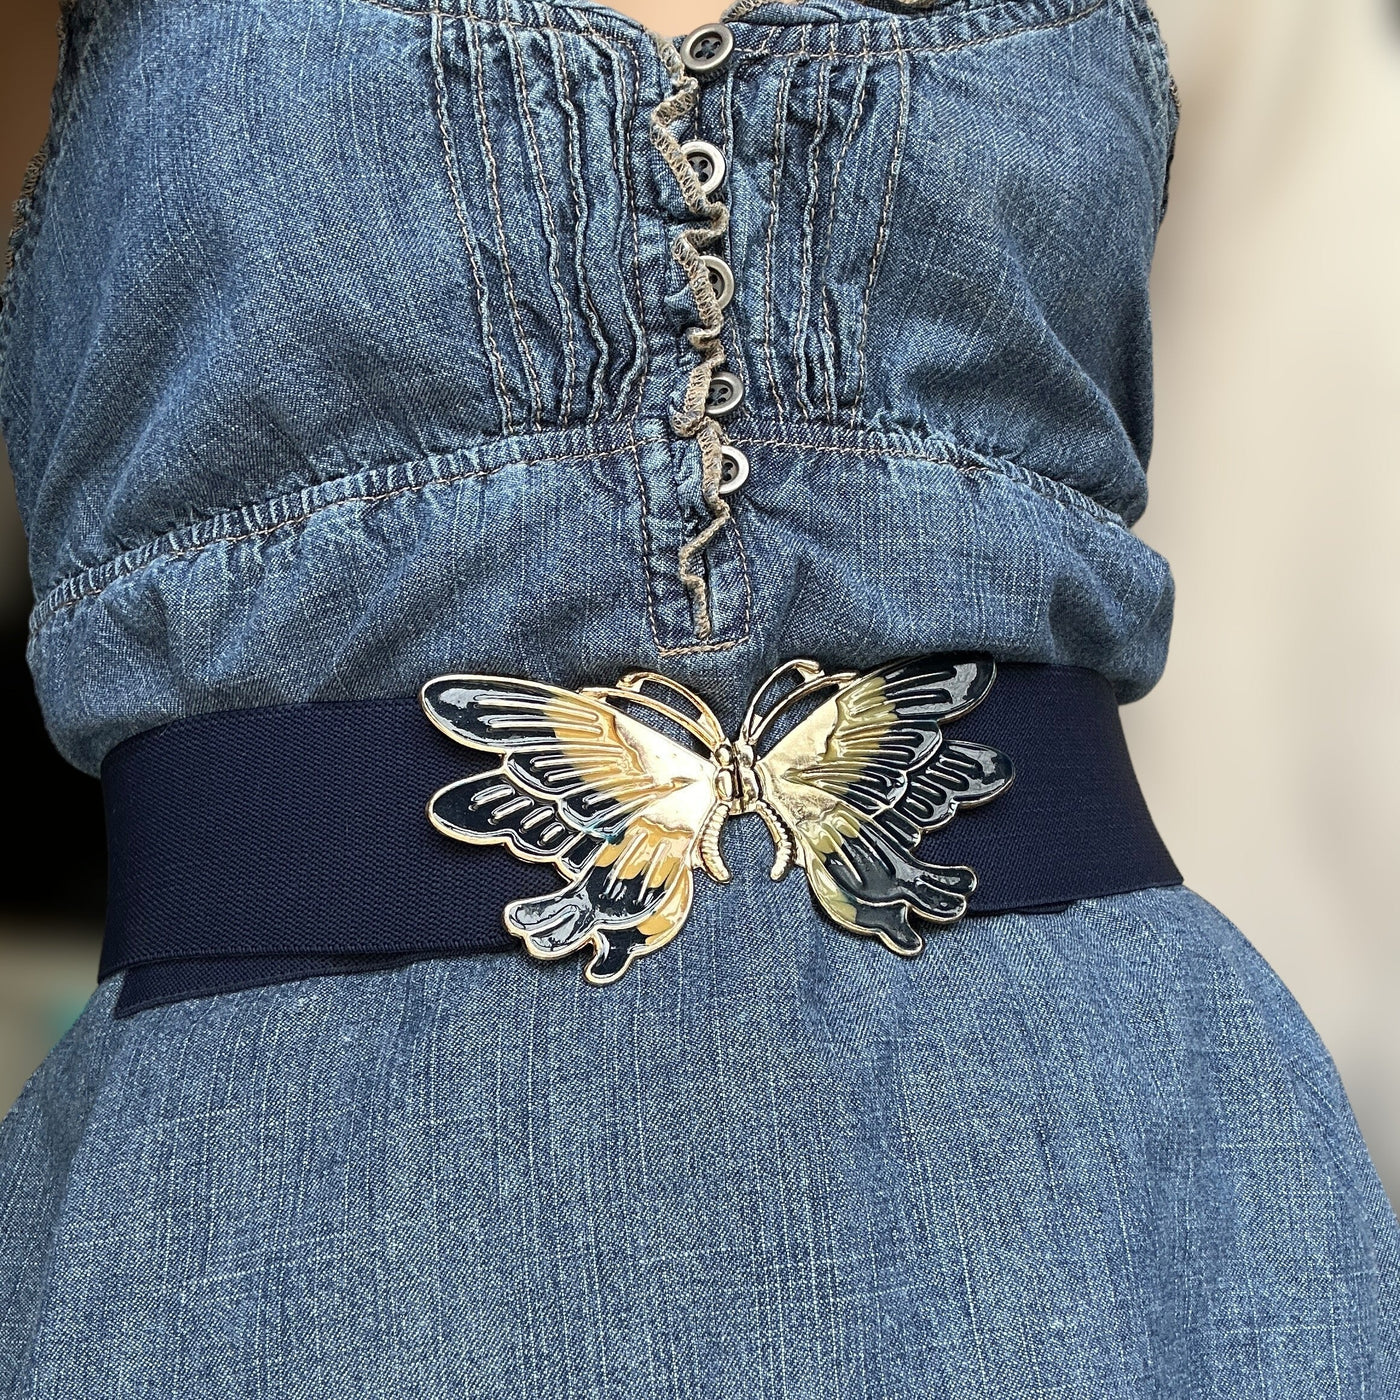 blue elastic belt vintage with enamel butterfly buckle